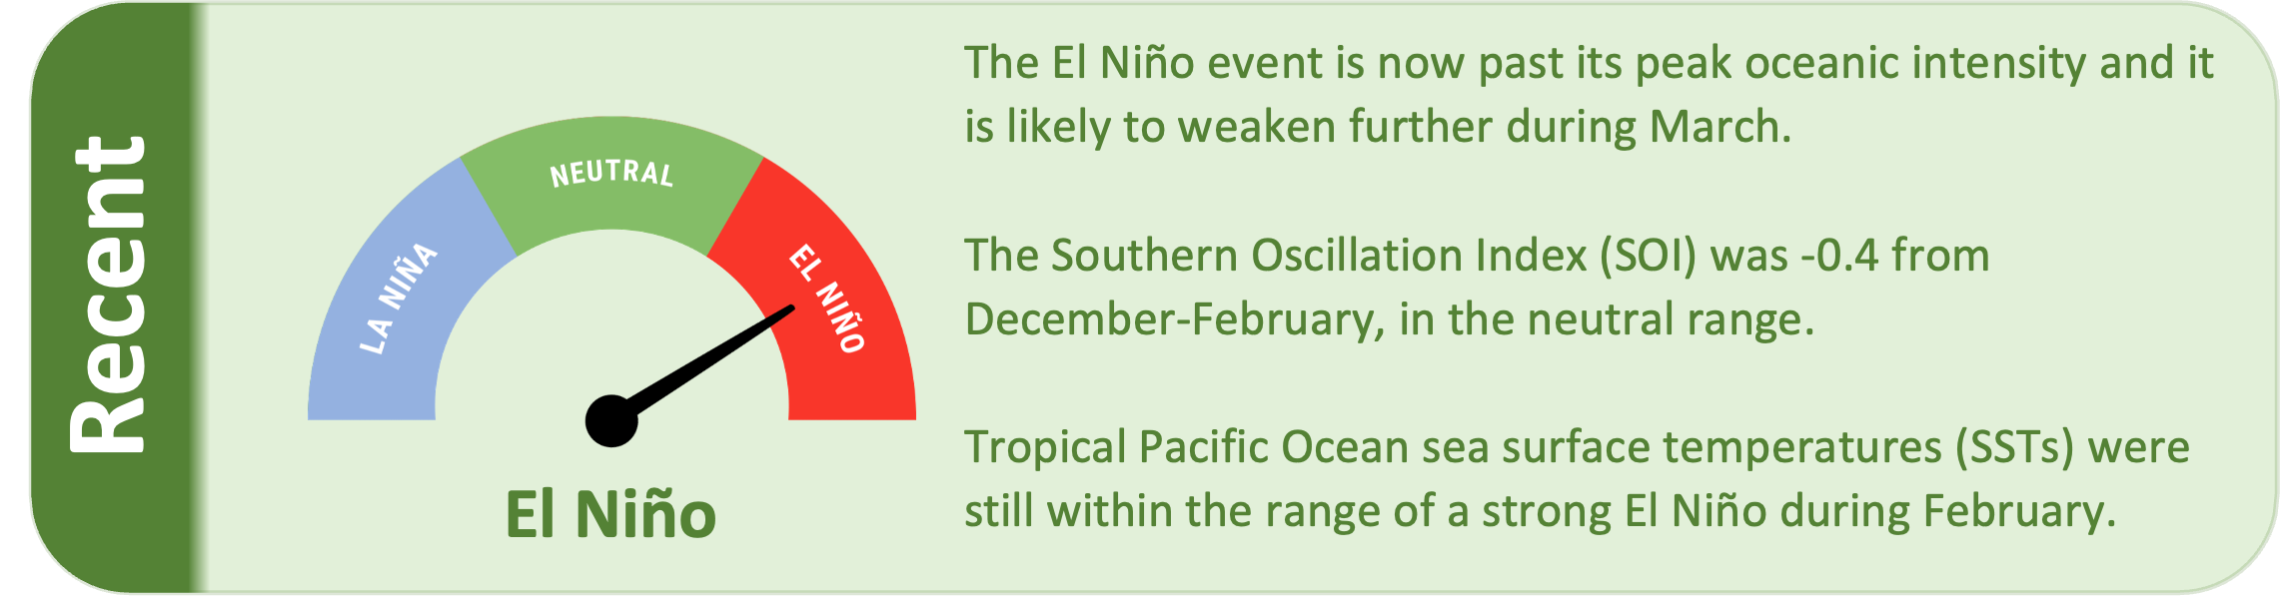 Recent information regarding El Niño - current El Niño event is past its peak oceanic intensity, atmospheric patterns will likely continue to show El Niño-like tendencies in the months ahead.